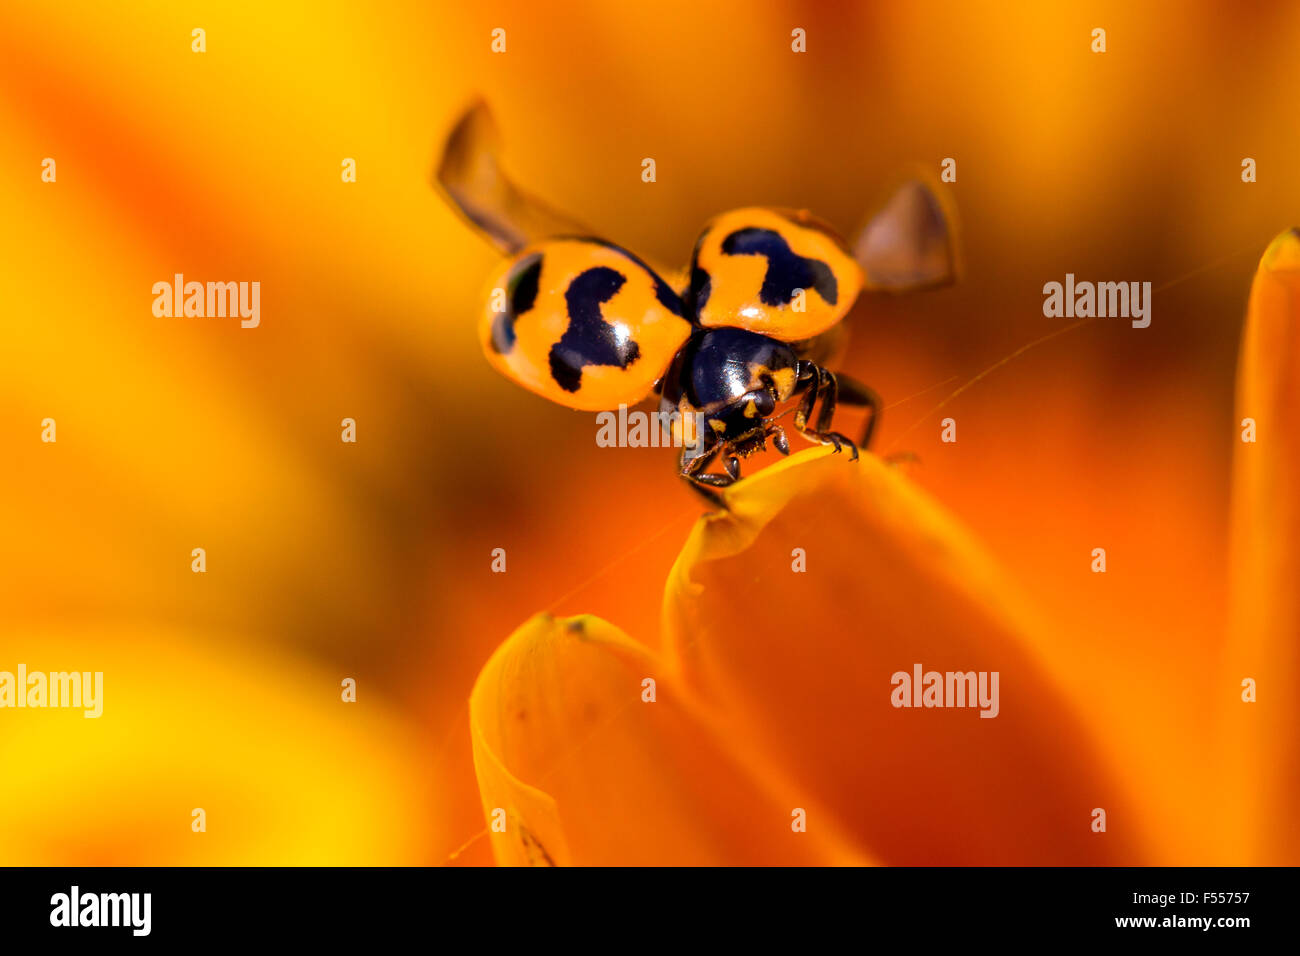 Lady Beetle encima de un pétalo de flor va a volar. Foto de stock